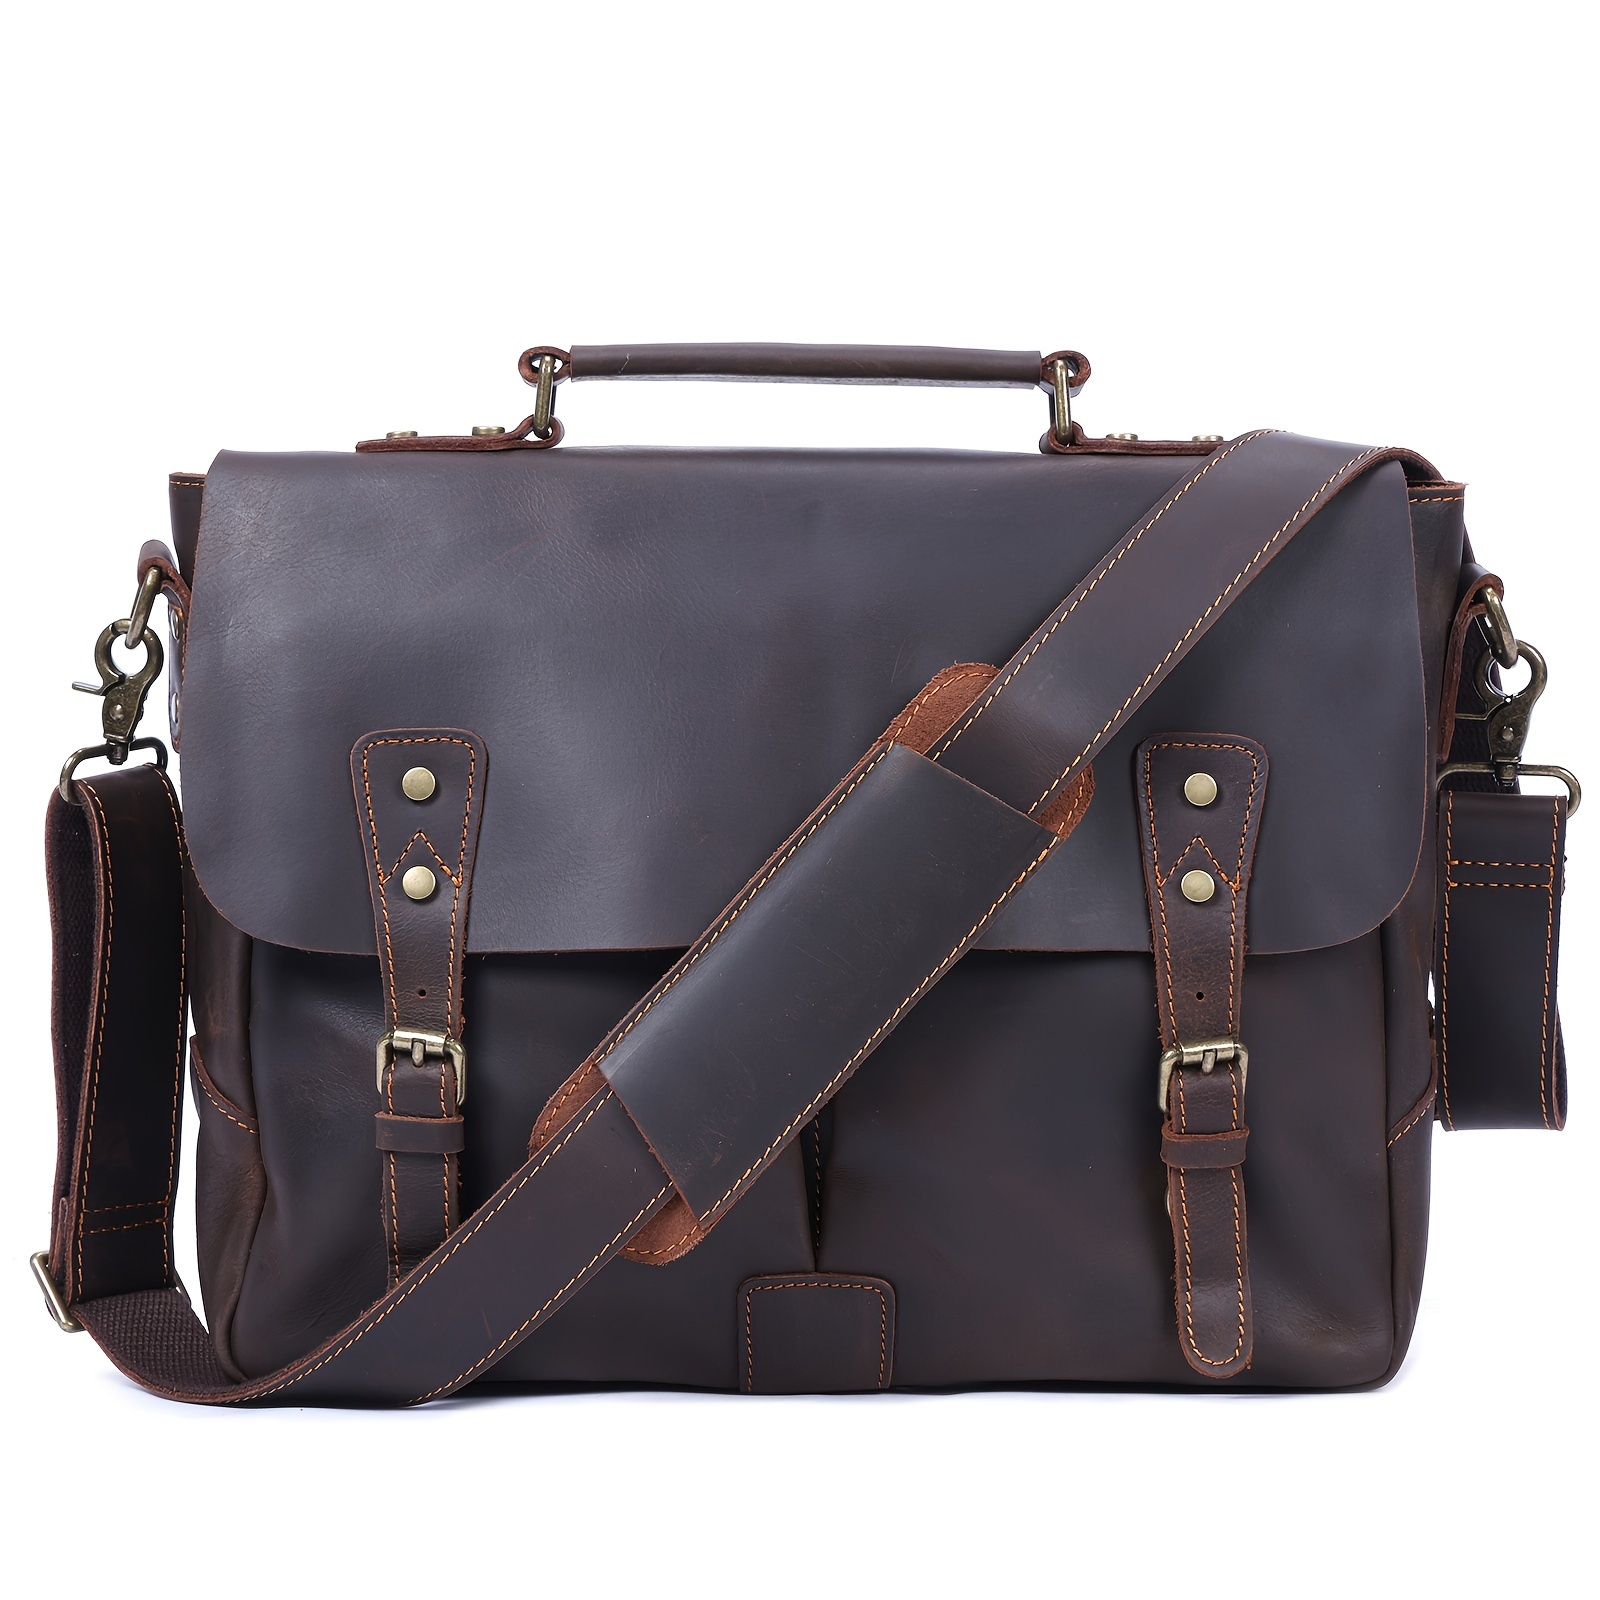 Men\'s Vintage Genuine Leather Briefcase Crossbody Bag, Bags For Work & Business